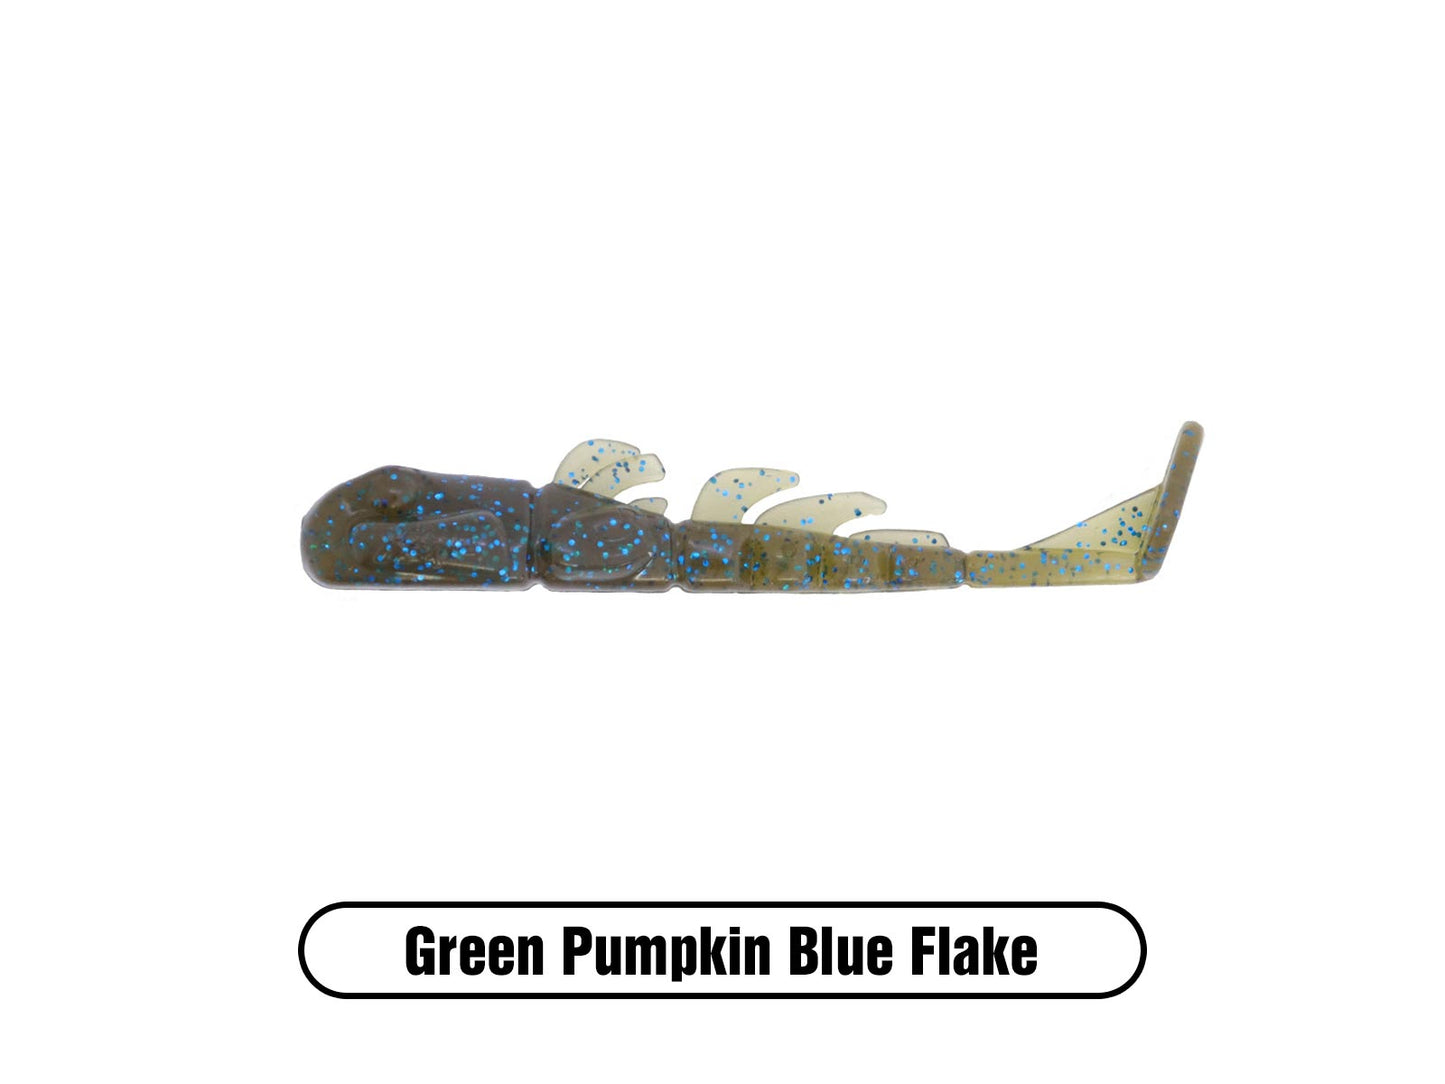 Stealth Invader Green Pumpkin Blue Flake